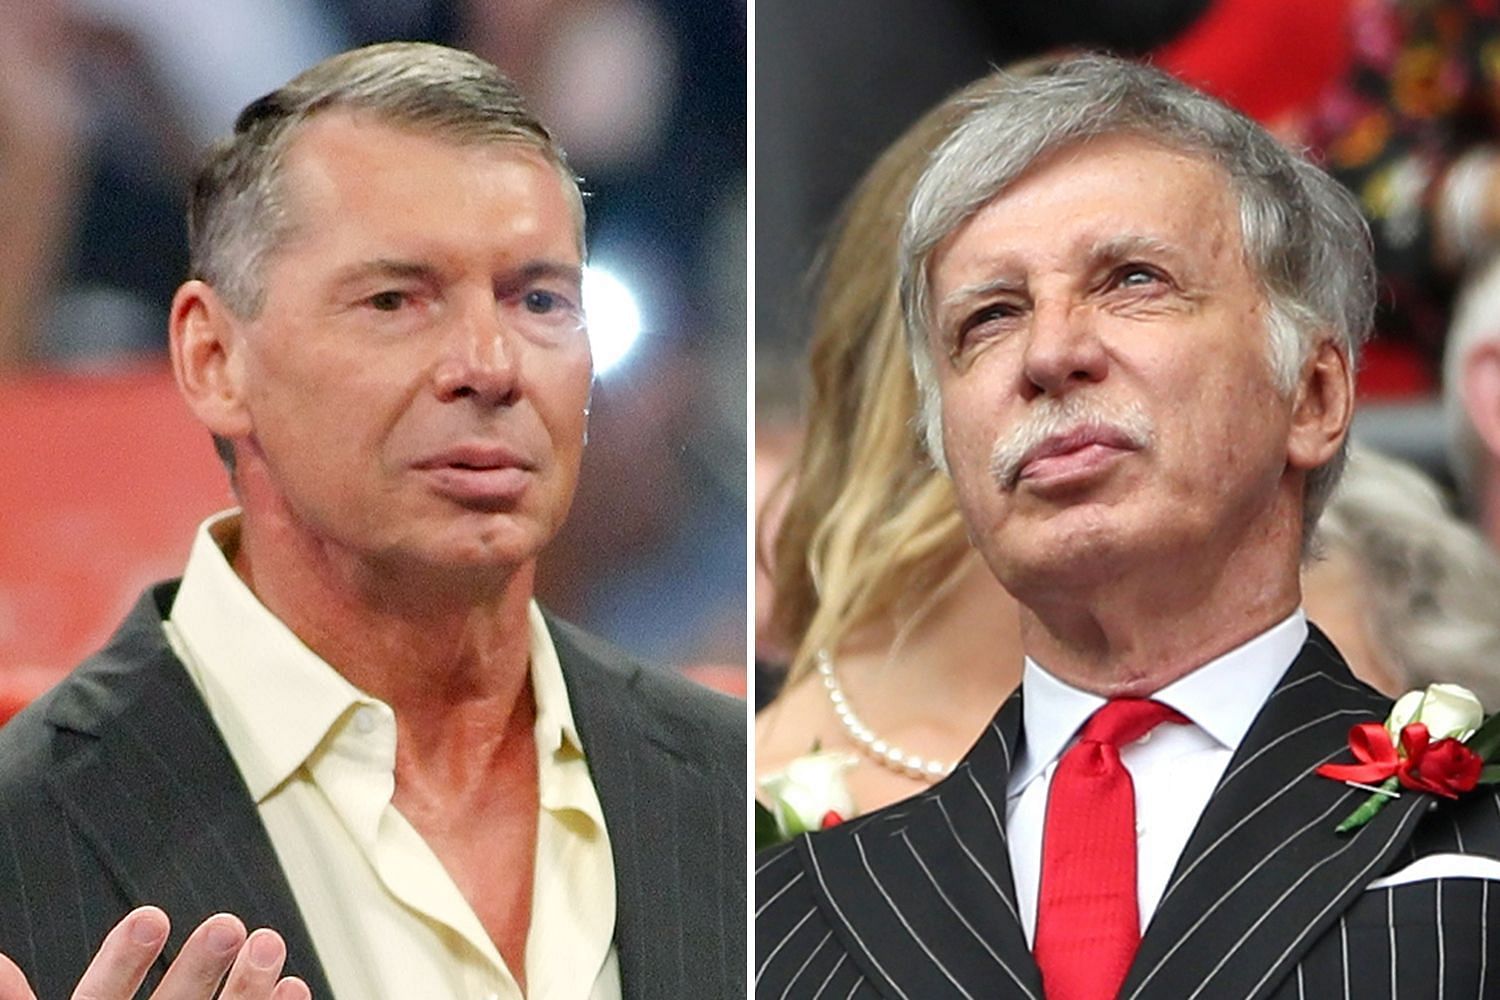 WWE chairman Vince McMahon and Denver Nuggets owner Stan Kroenke